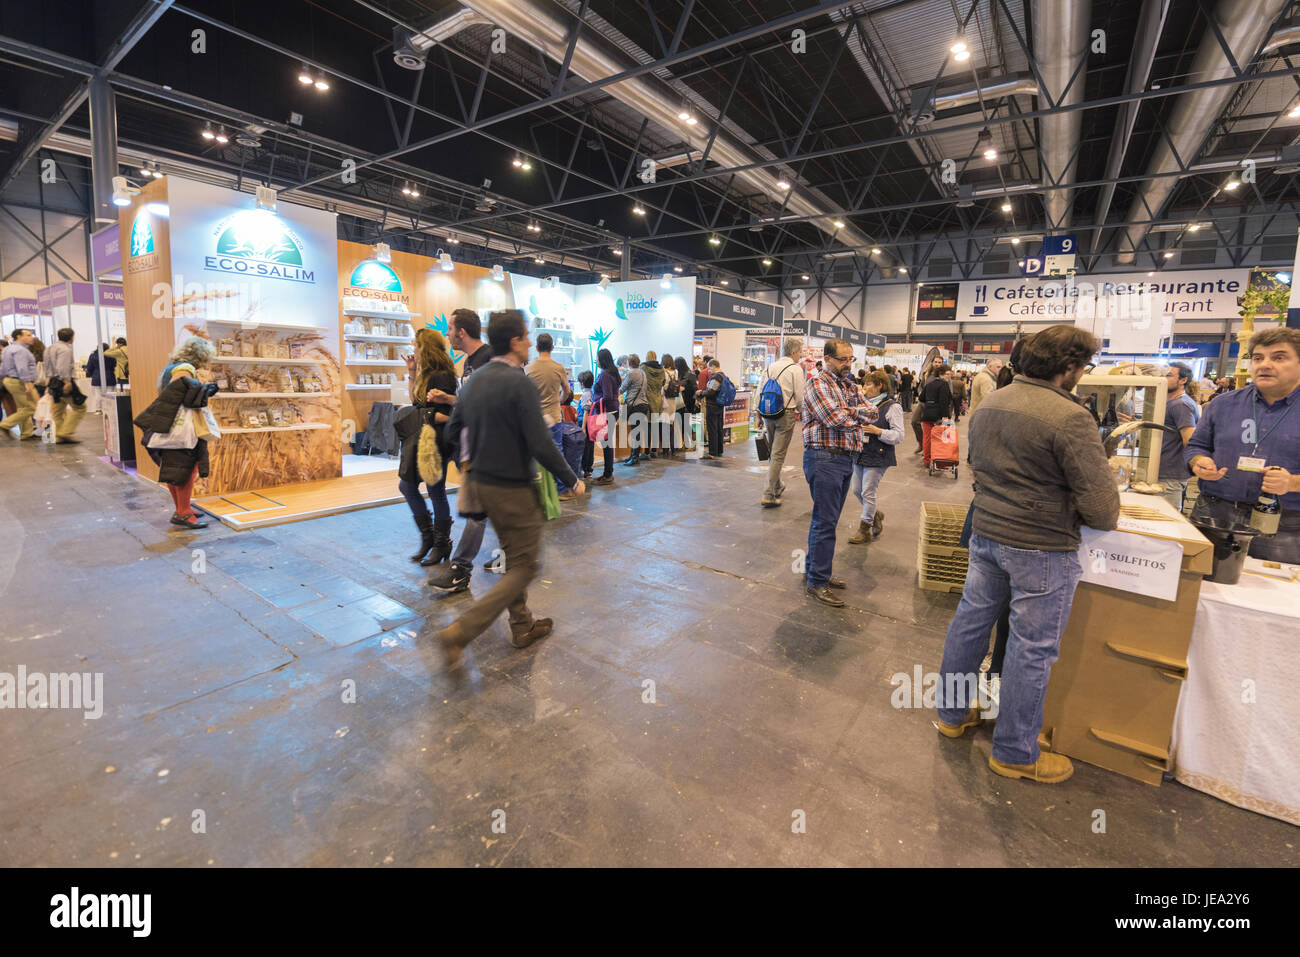 Madrid, Spain - November 13, 2016: People visiting organic food fair on November 13, 2016 in IFEMA, Madrid, Spain. Stock Photo